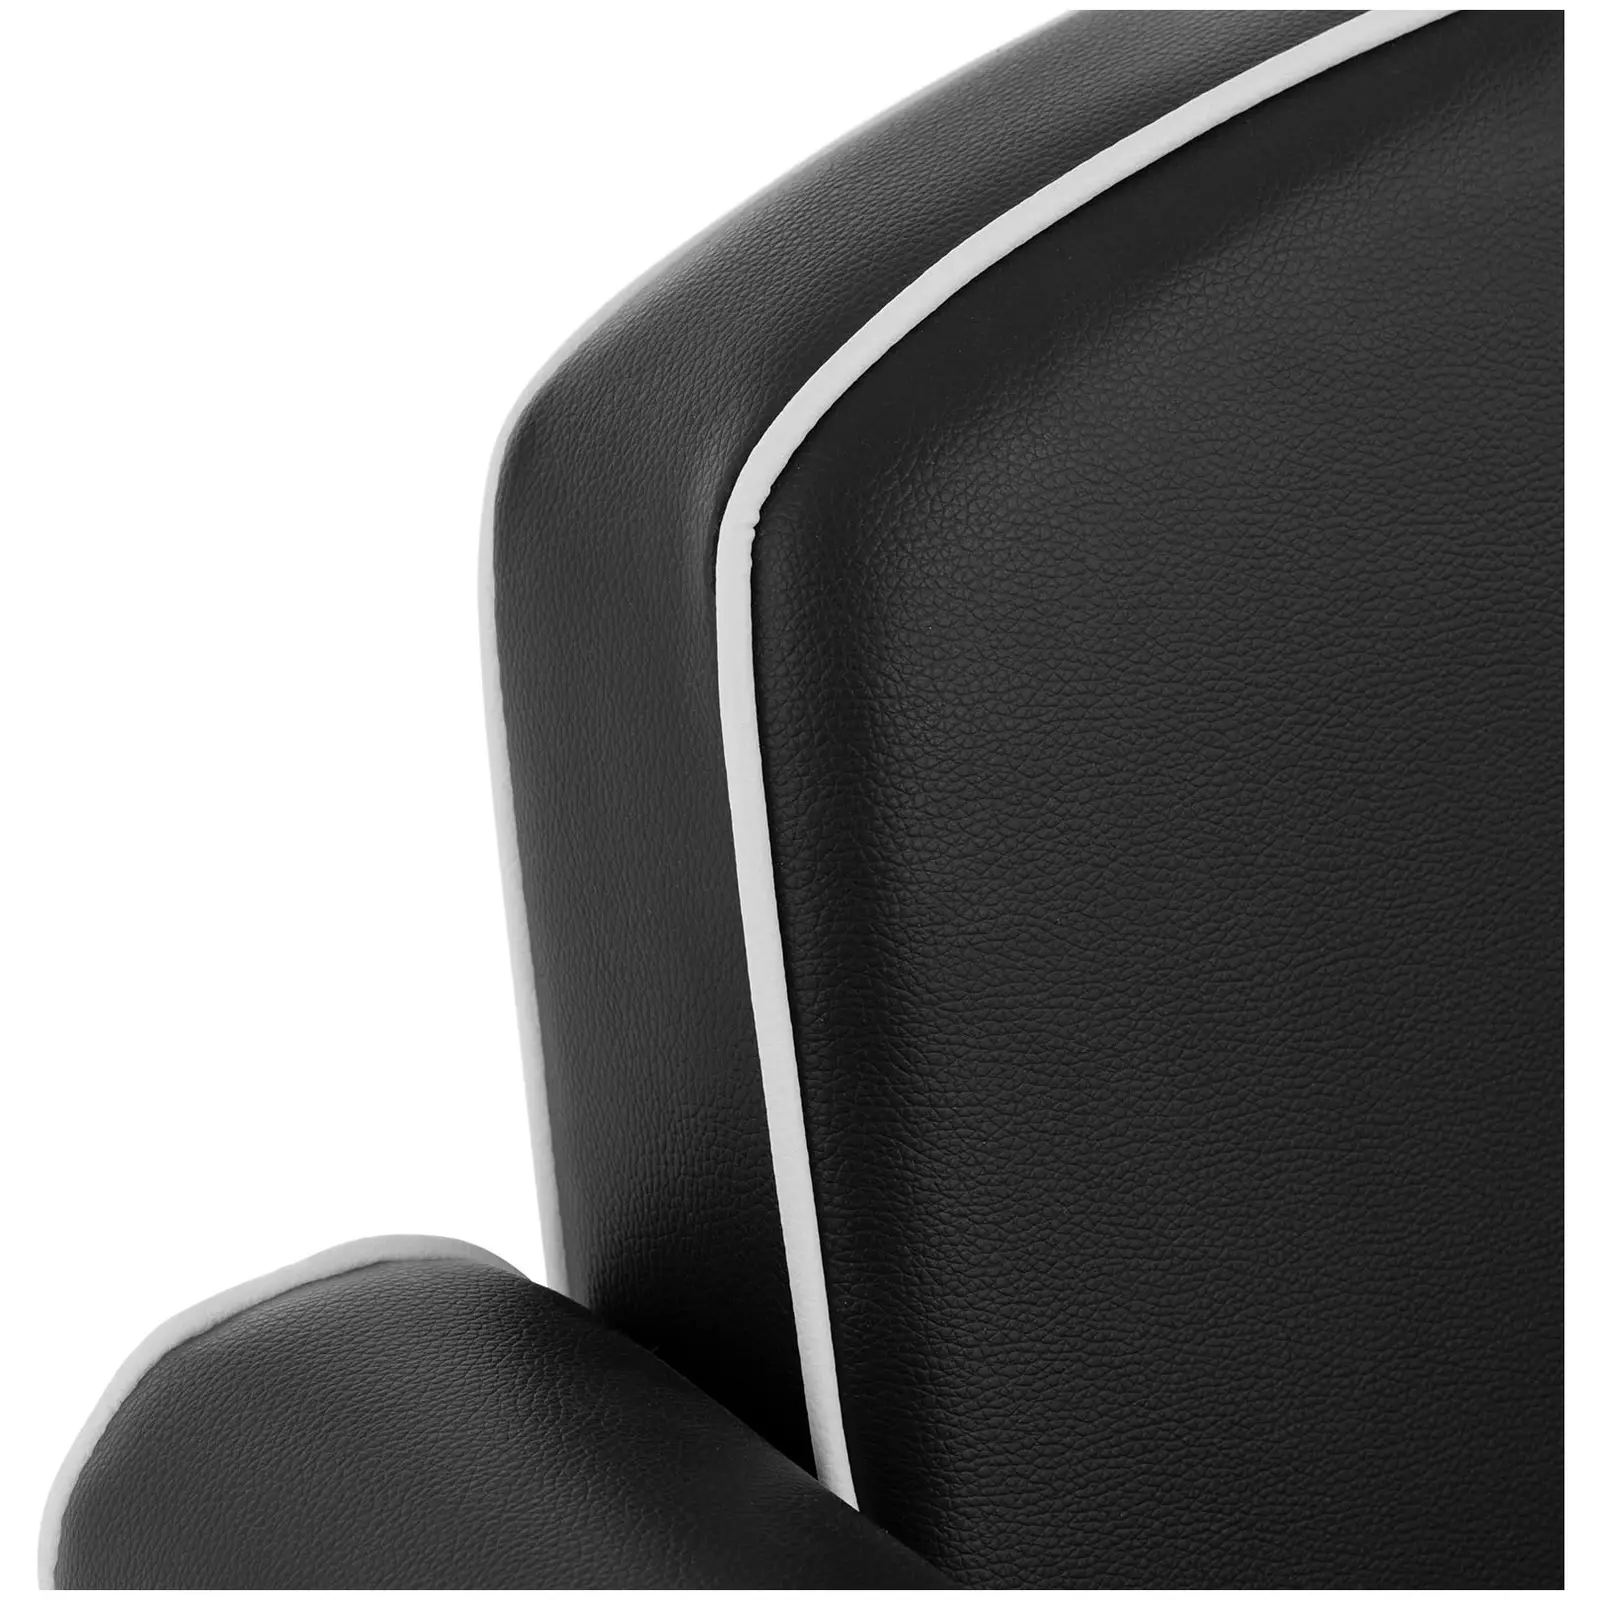 Salon Chair with Footrest - 520 - 630 mm - 150 kg - Black